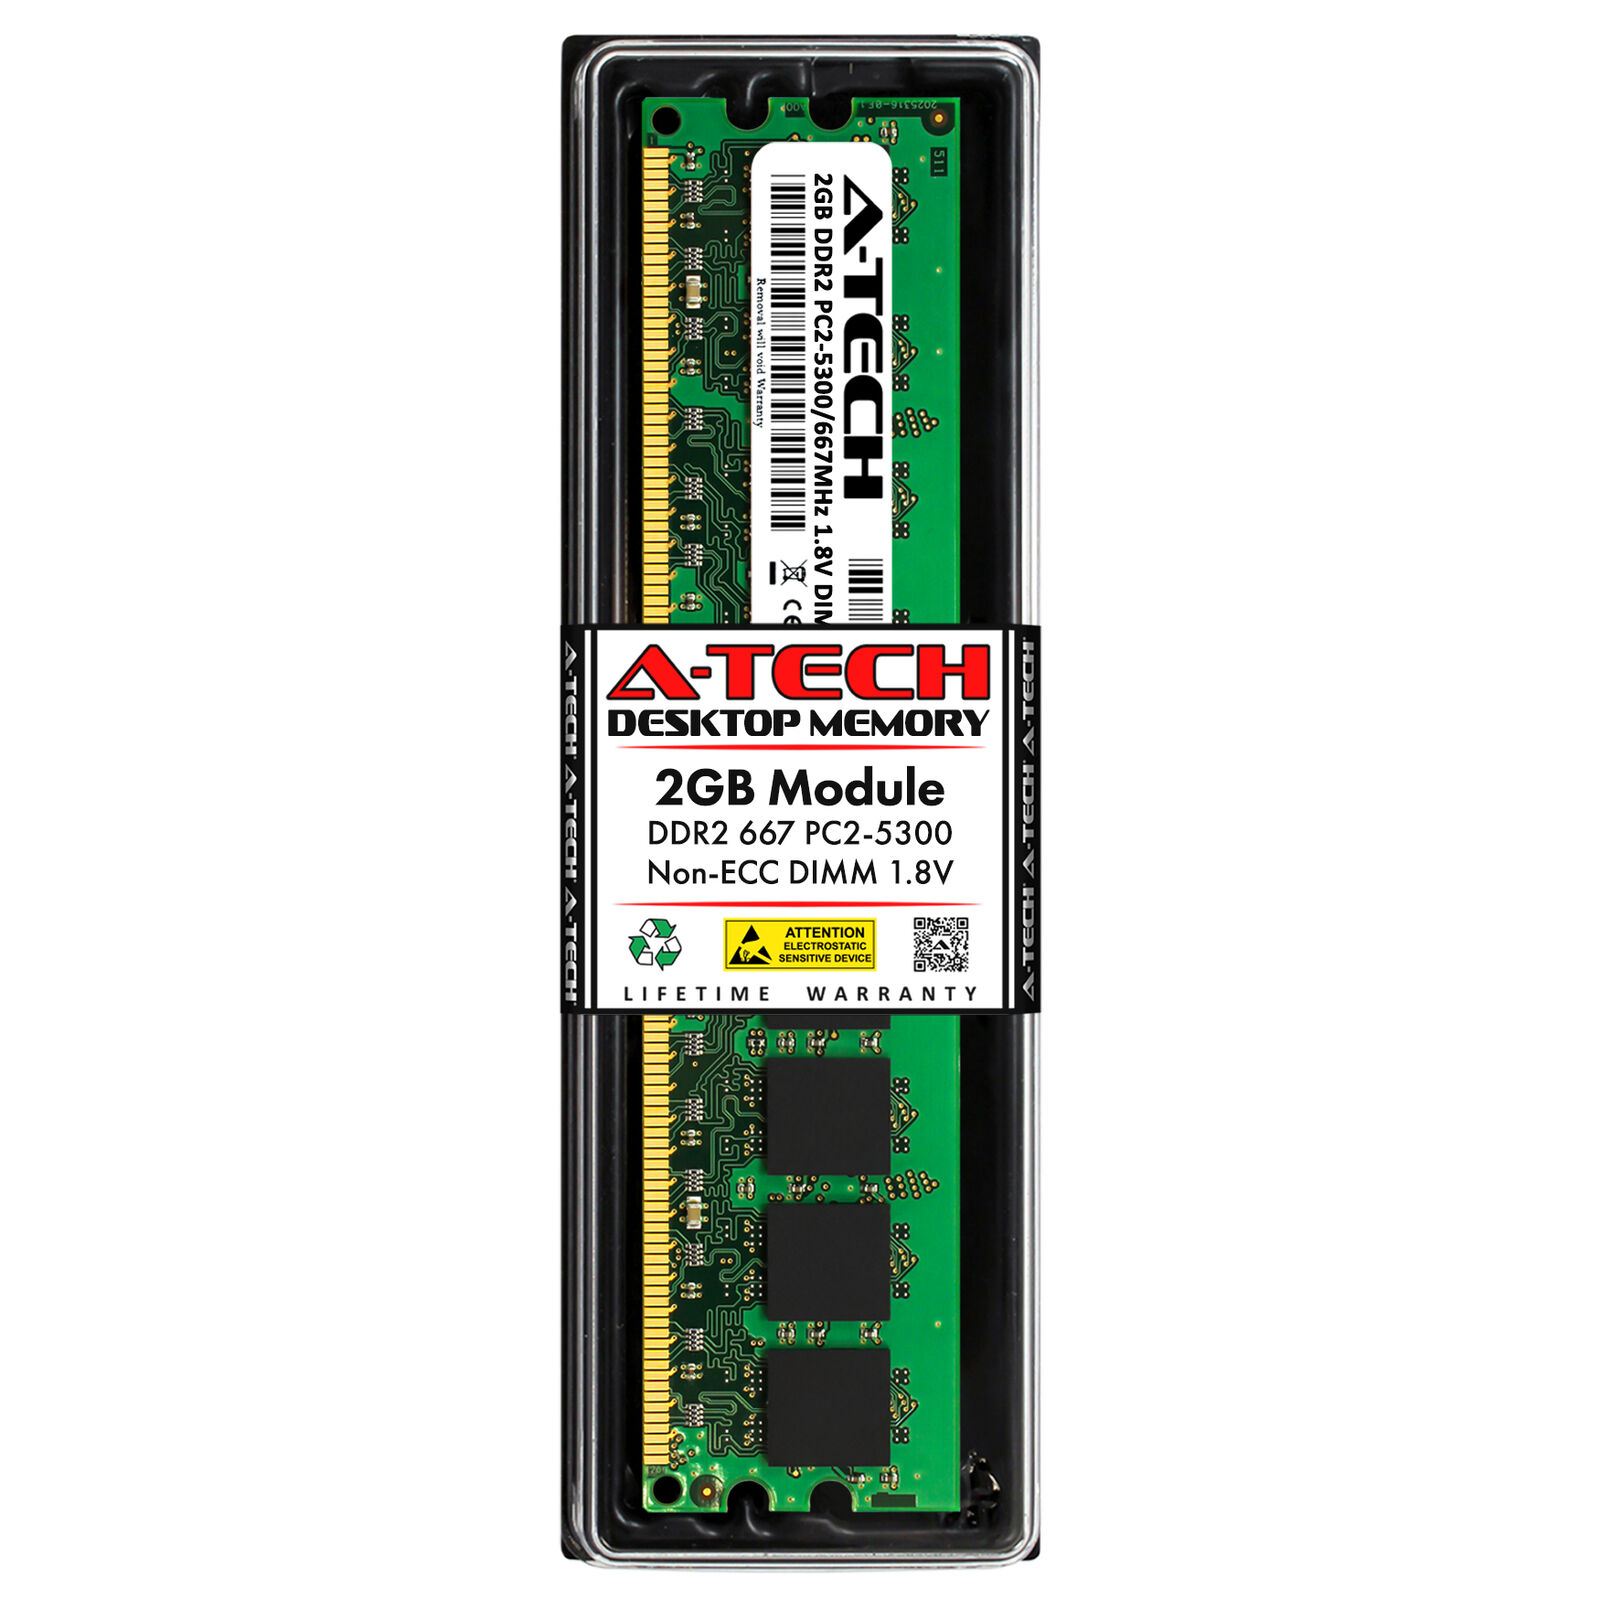 2GB DDR2-667 DIMM Kingston KTH-XW4300/2GB Equivalent Desktop Memory RAM